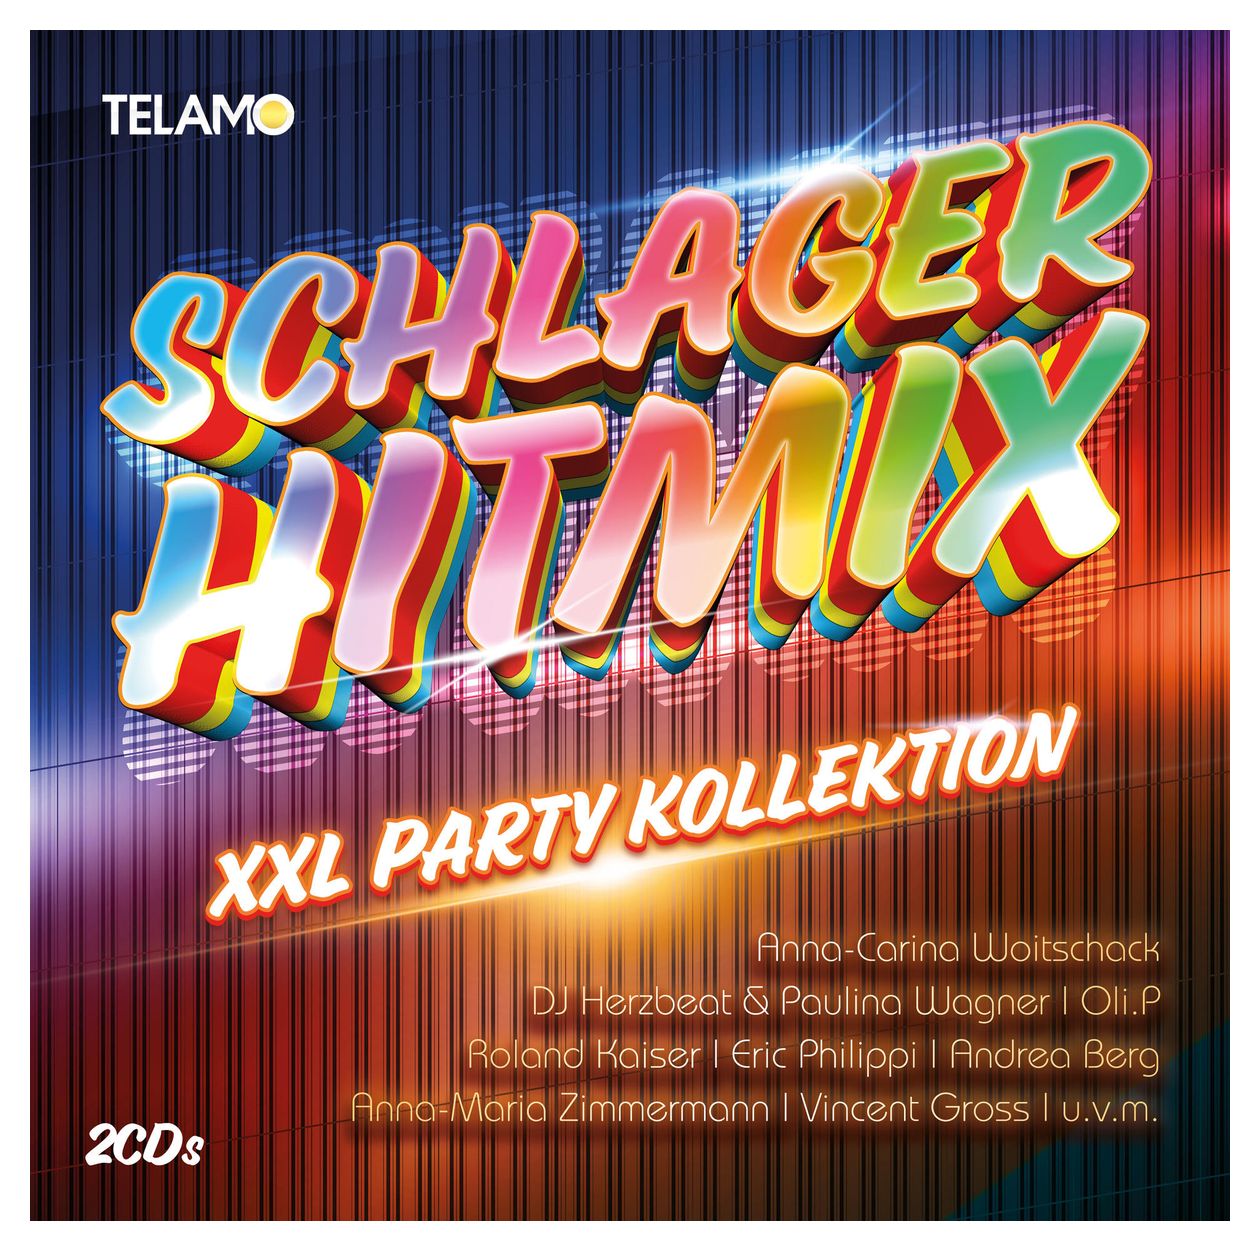 VARIOUS - Schlager HITMIX:Die XXL Party Kollektion 